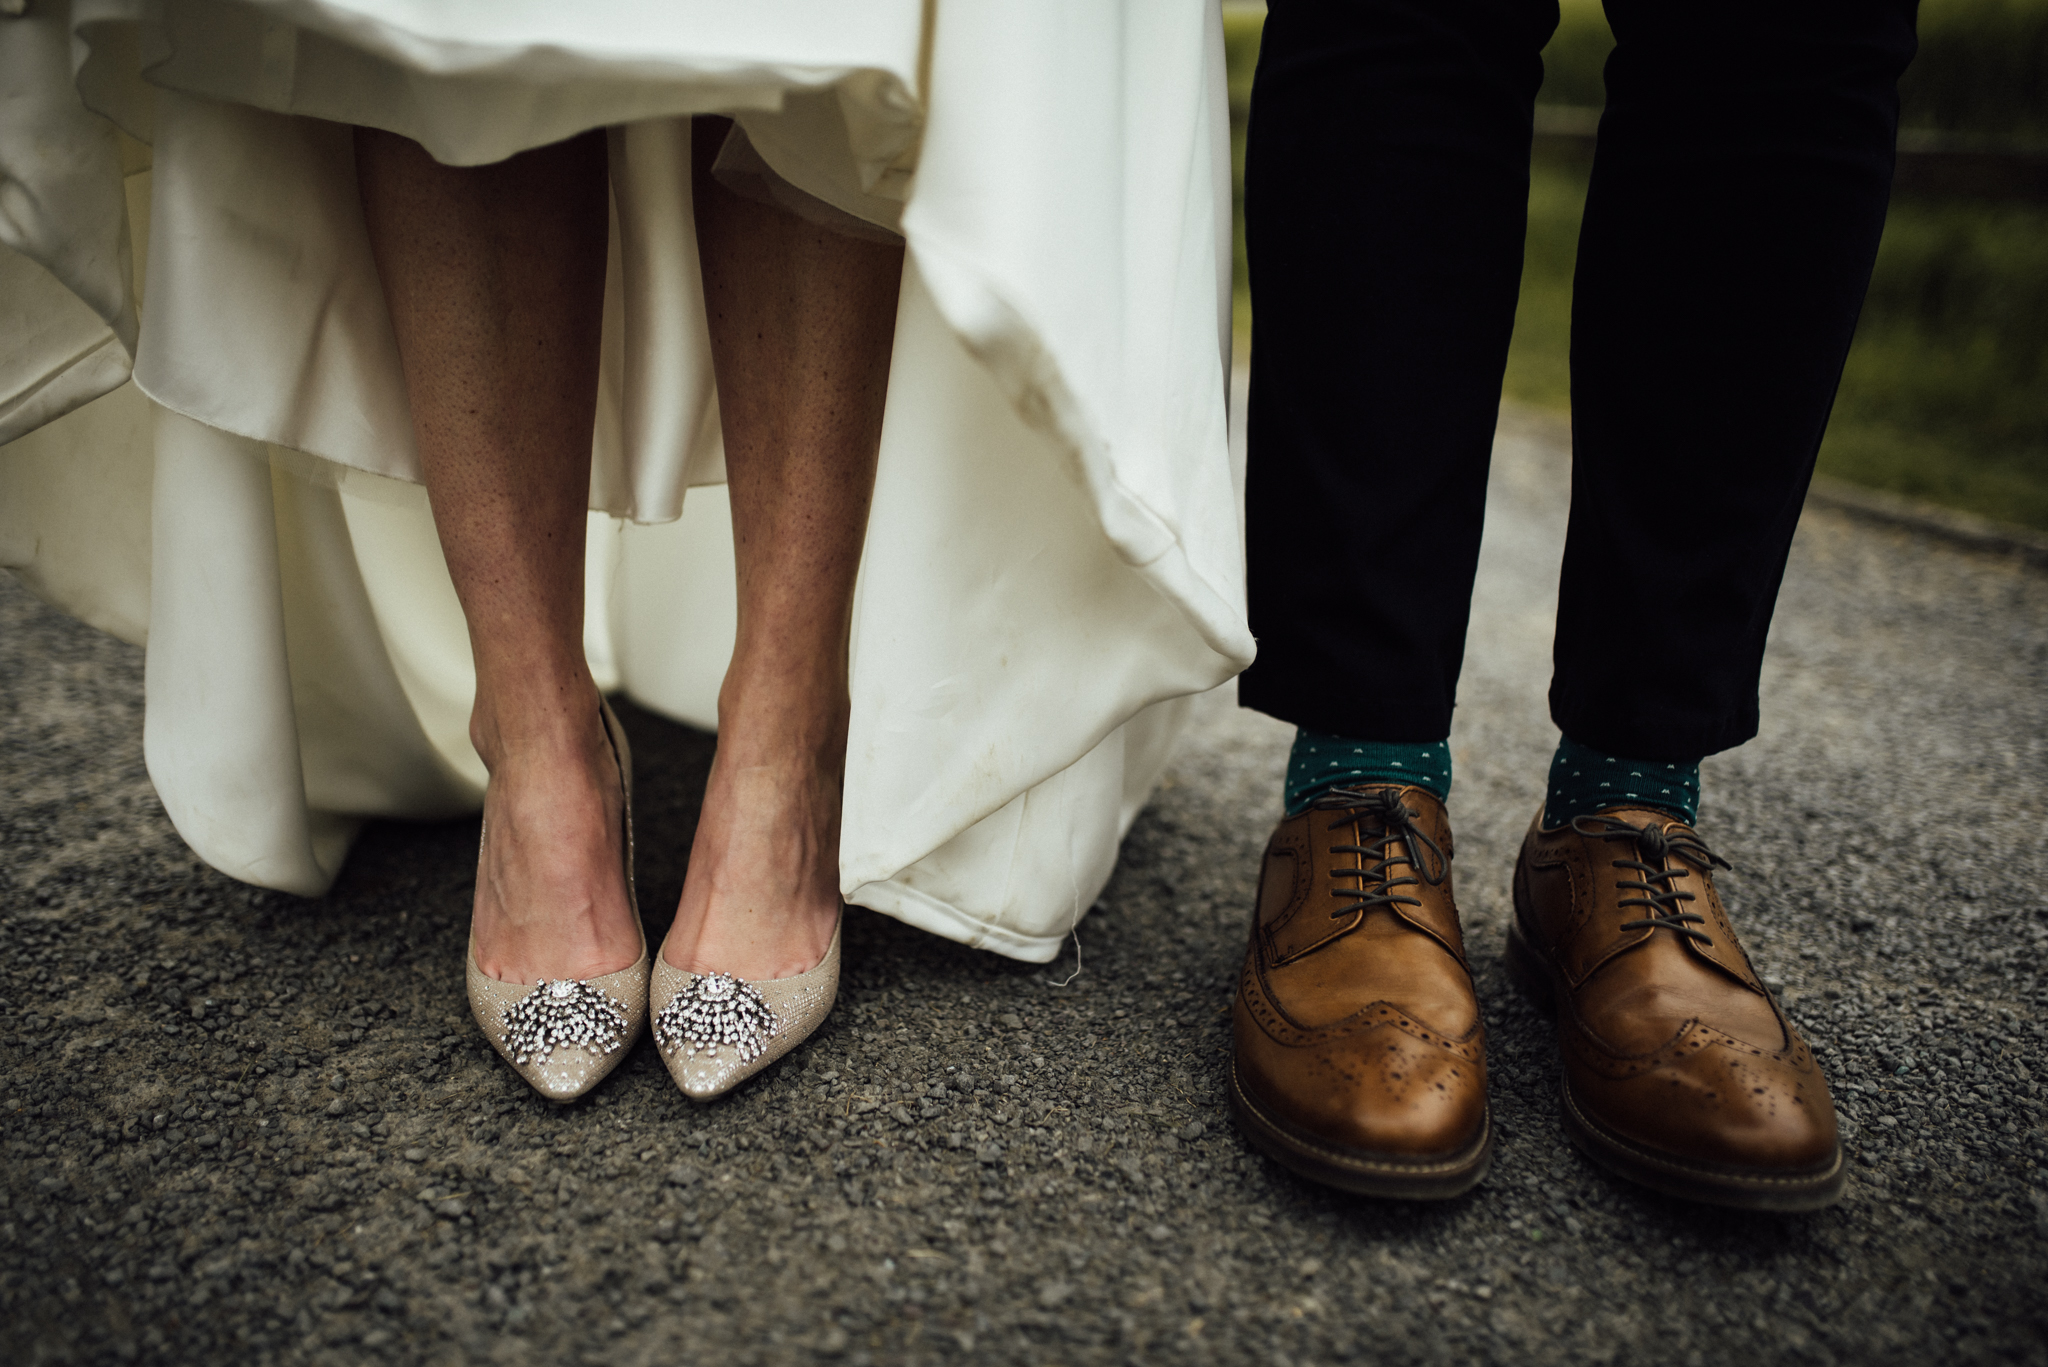 michelle wood photographer, stratton court barn wedding, Manolo Blahnik wedding shoes